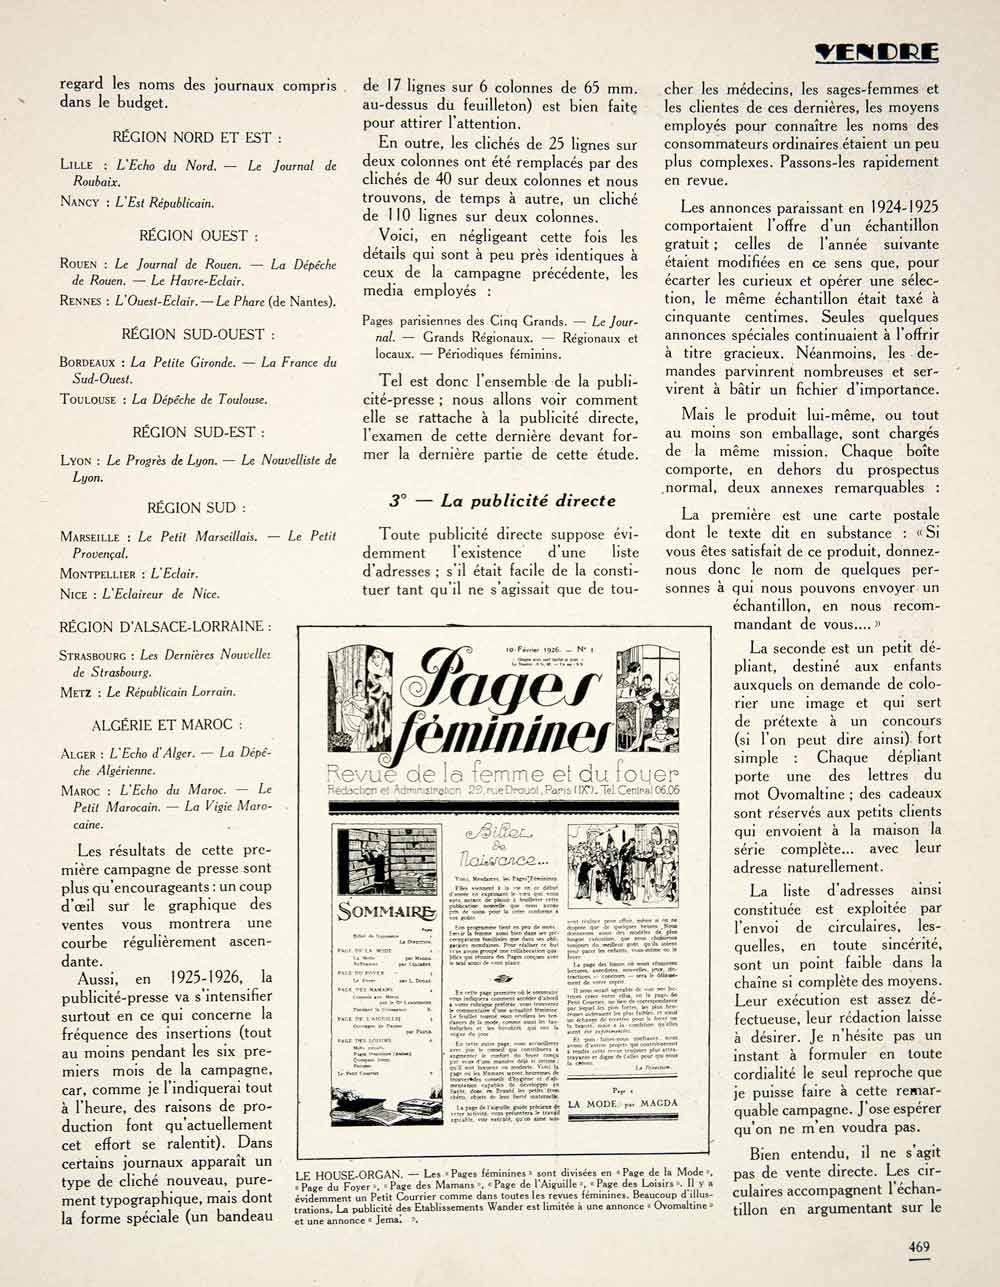 1926 Article Ovomaltine Jean Neuilly Campaign 58 Rue Charonne Ovaltine VENA2